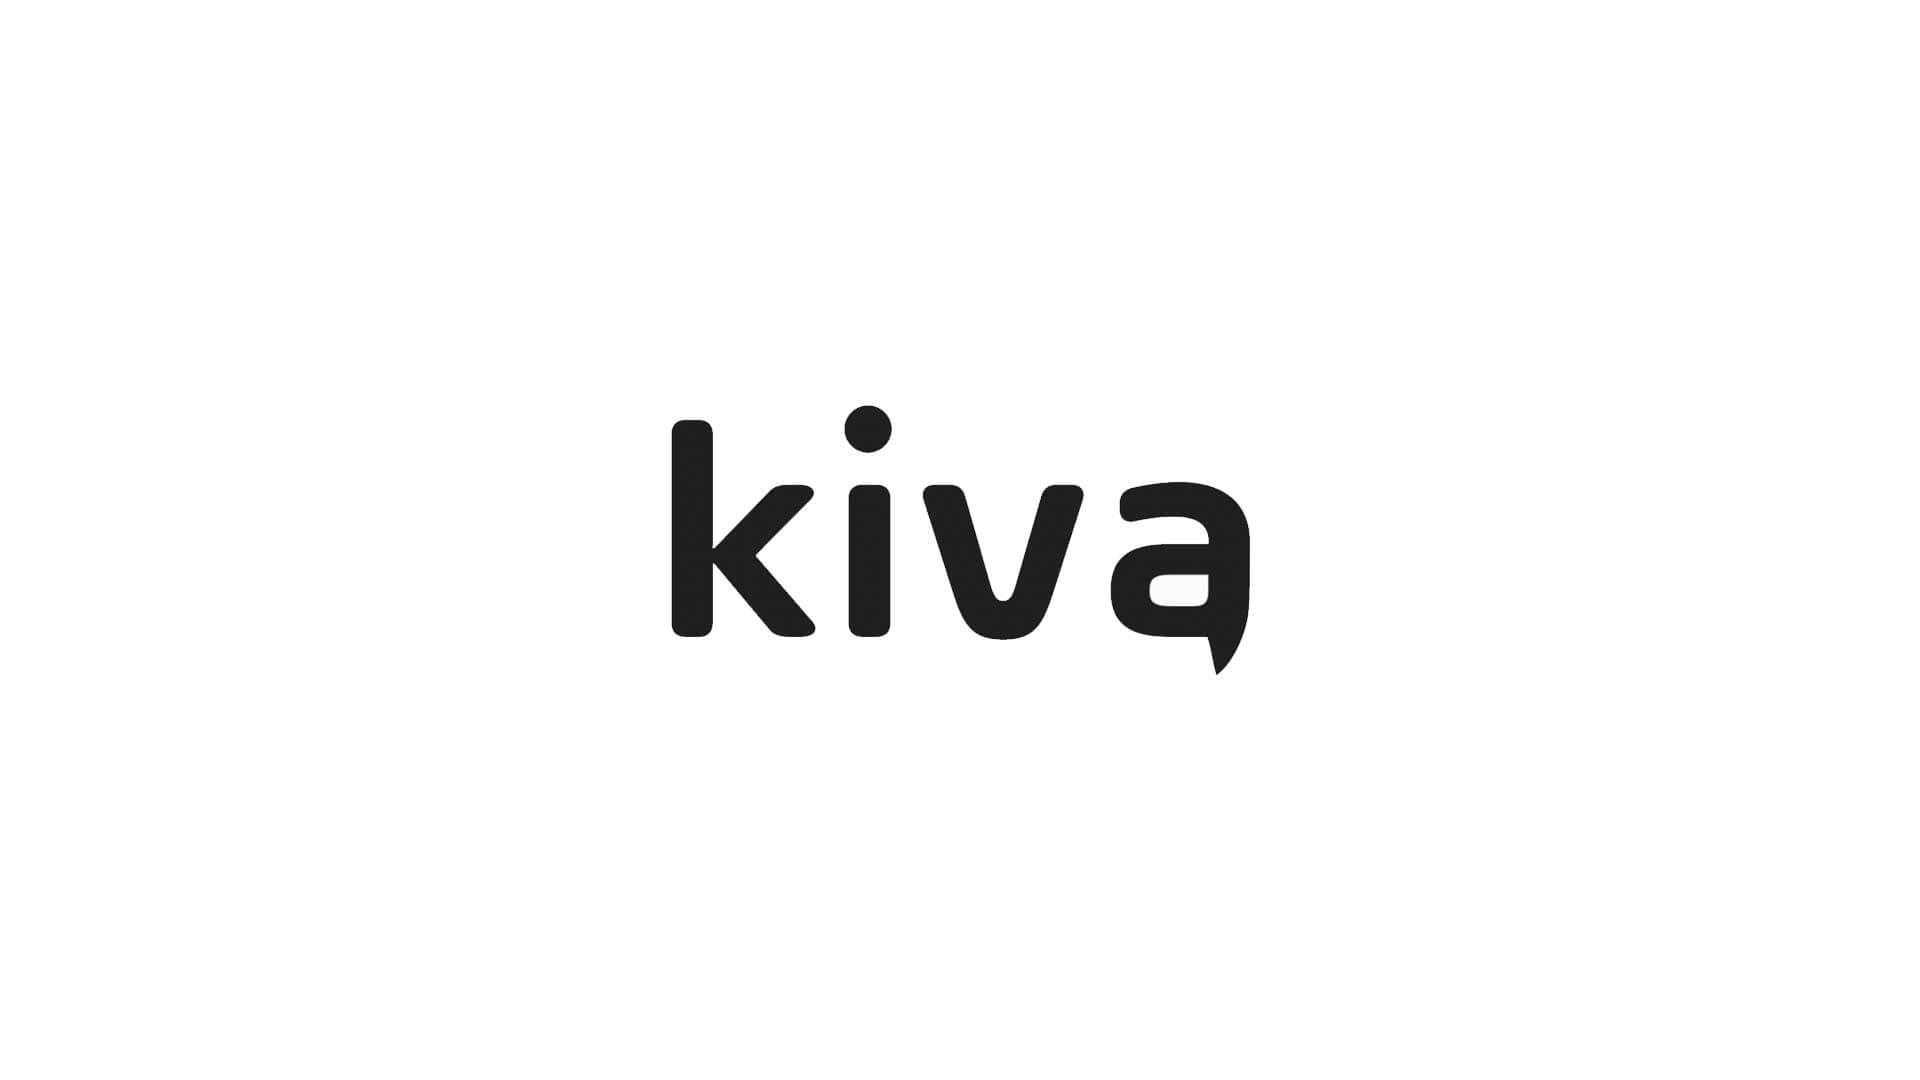 株式会社Kiva